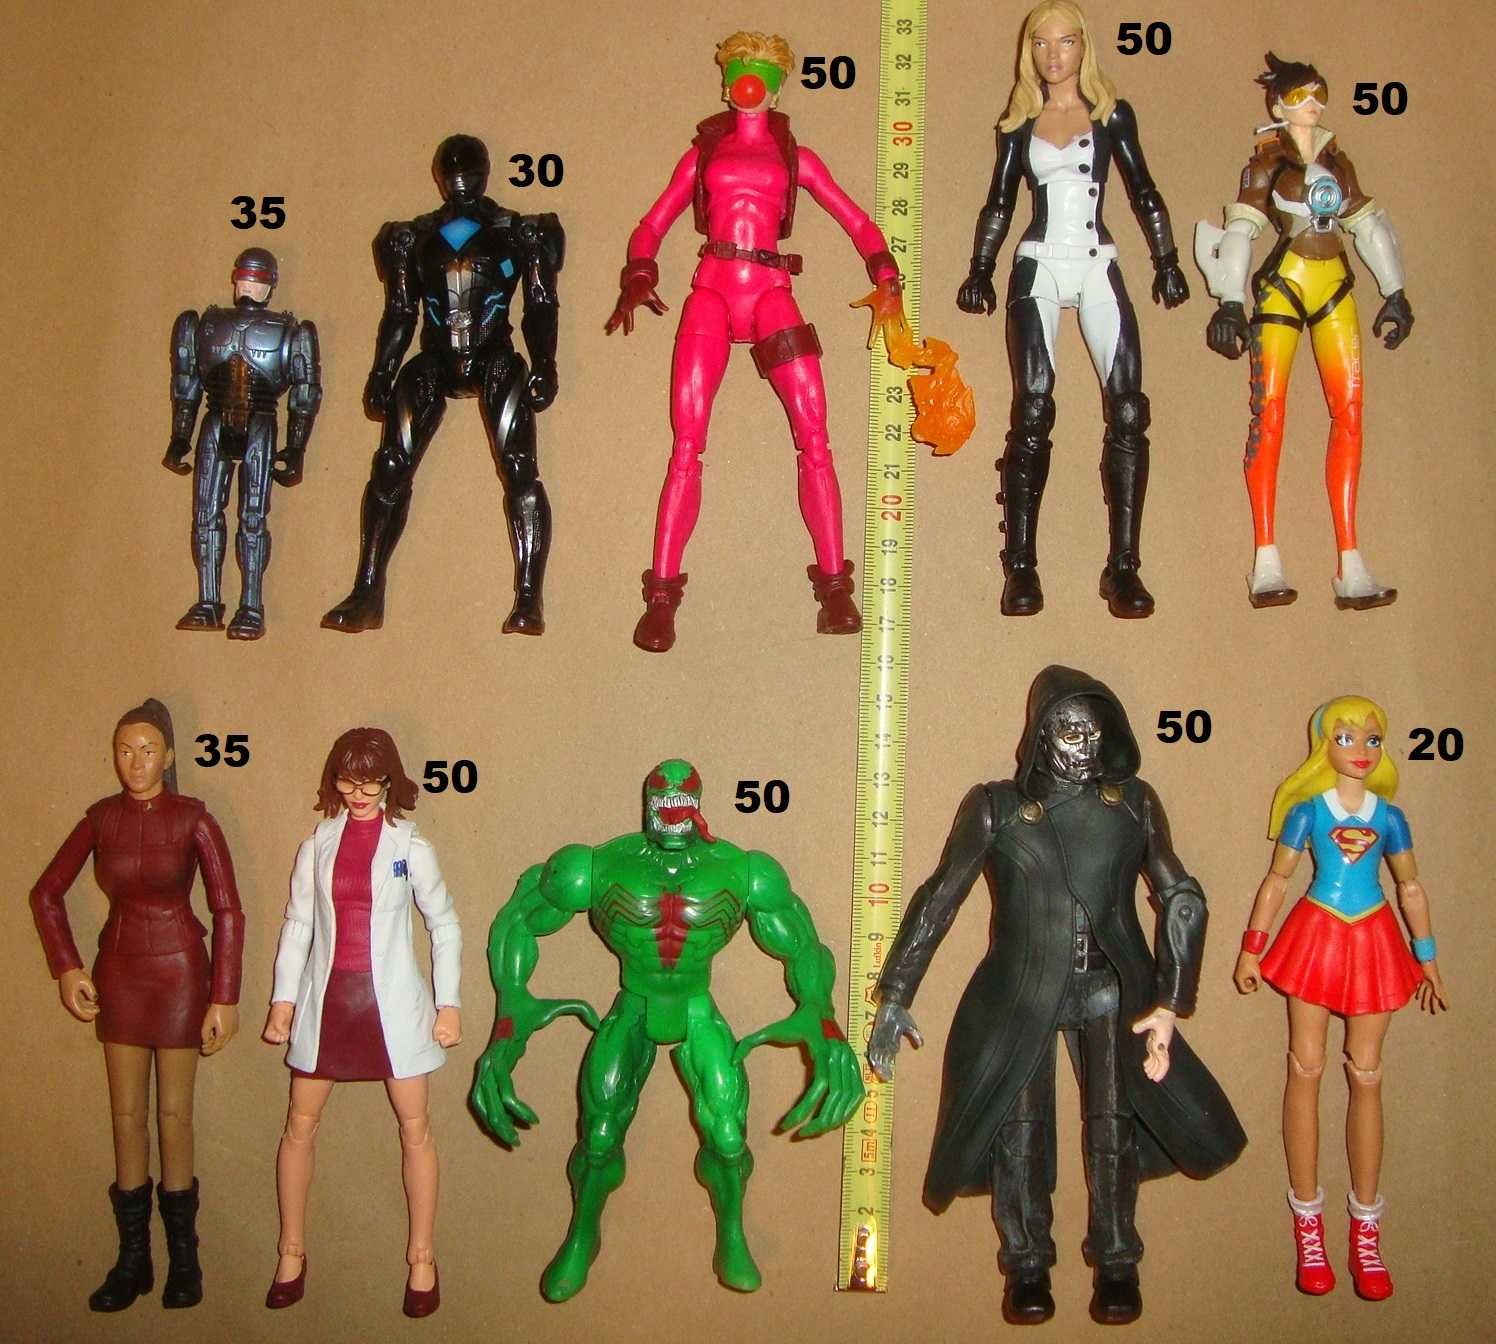 Figurine Vintage Spiderman, XMen Avengers Marvel Super eroi etc.